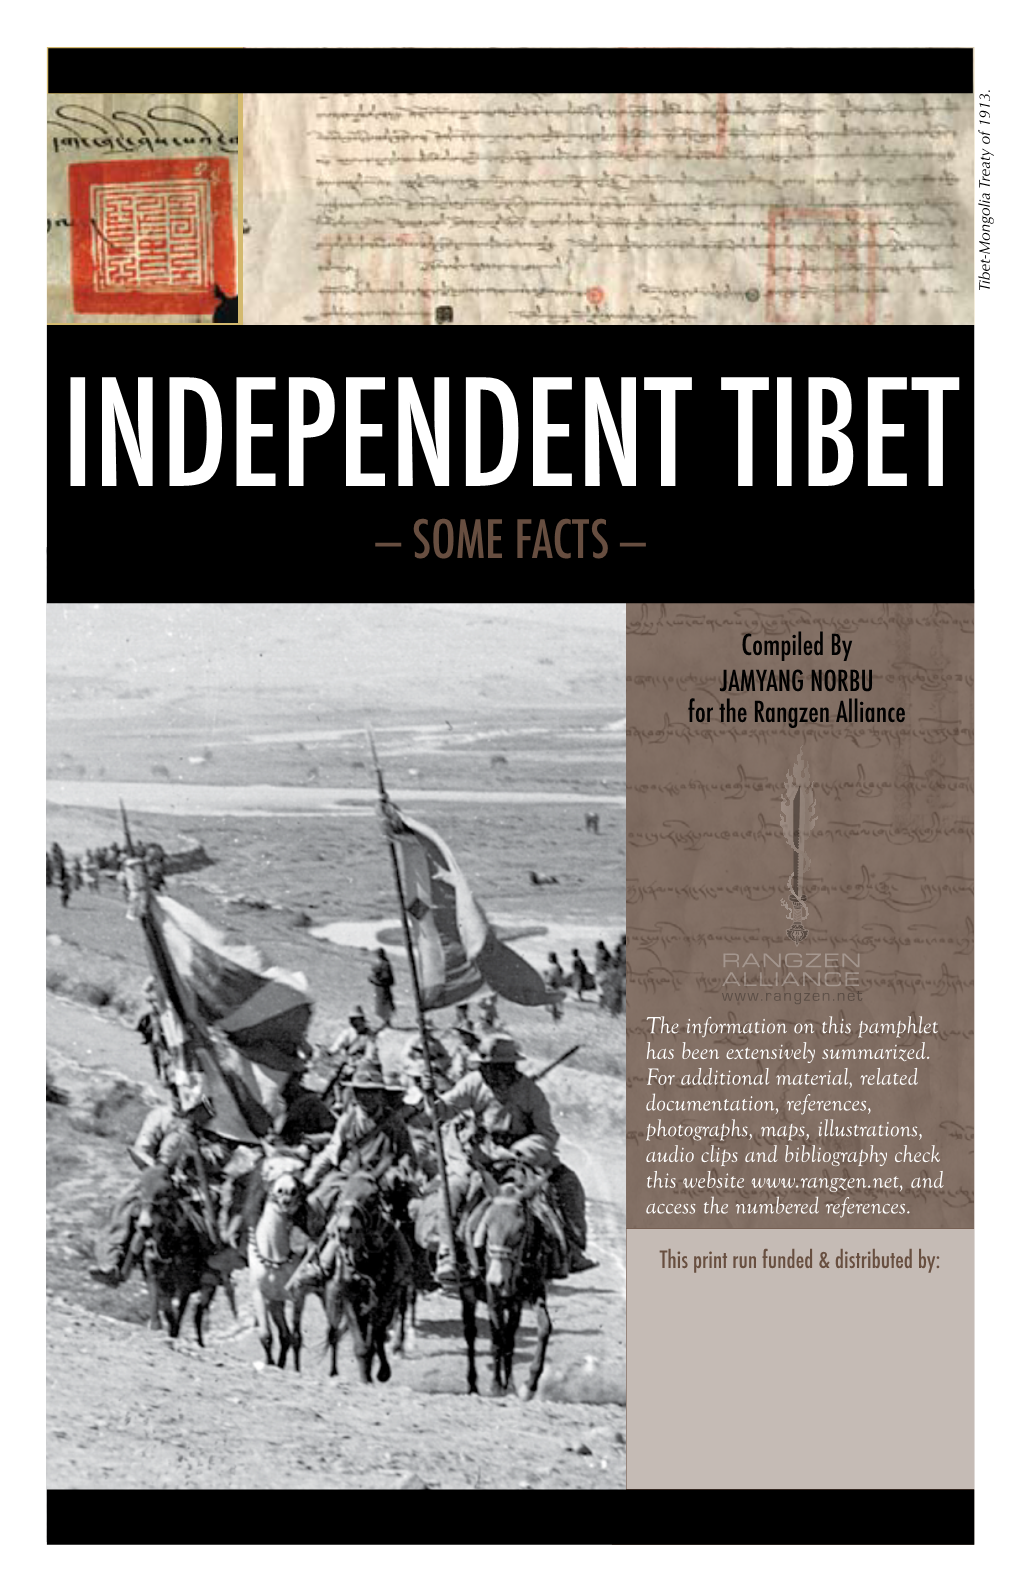 Independent Tibet by Jamyang Norbu